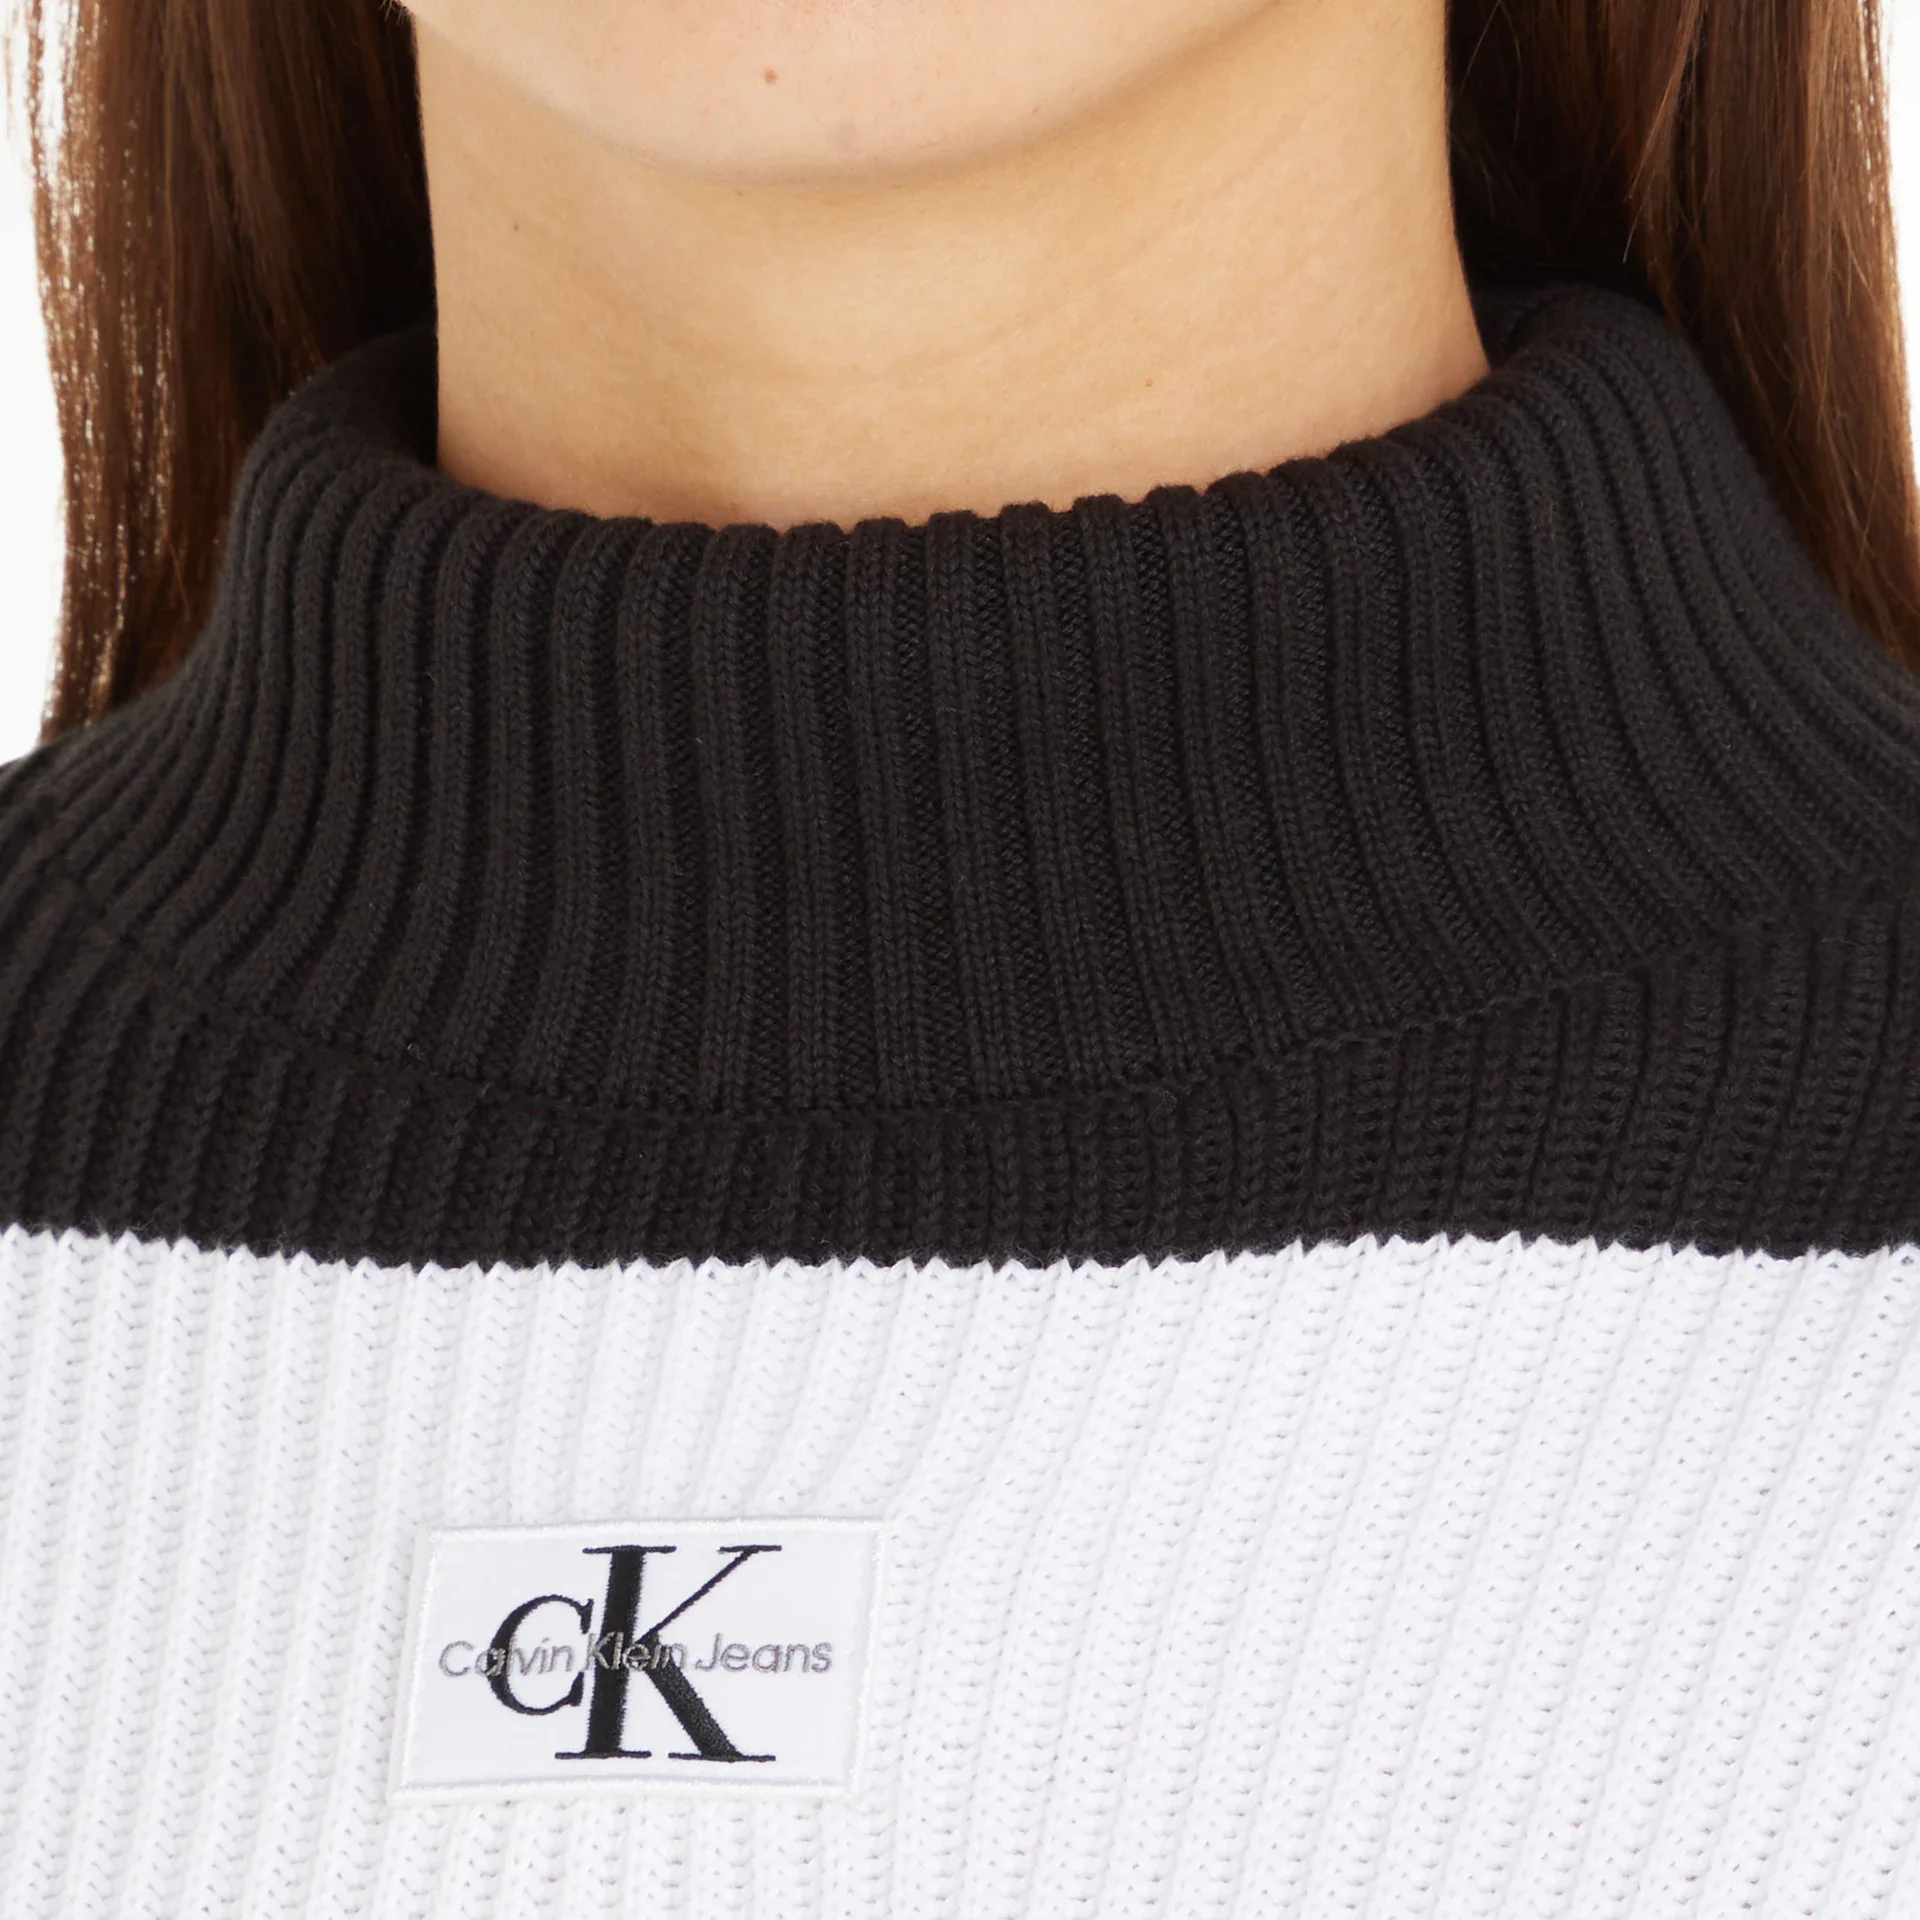 Calvin Klein Jeans Label Chunky Sweater Black/Bright White Stripes